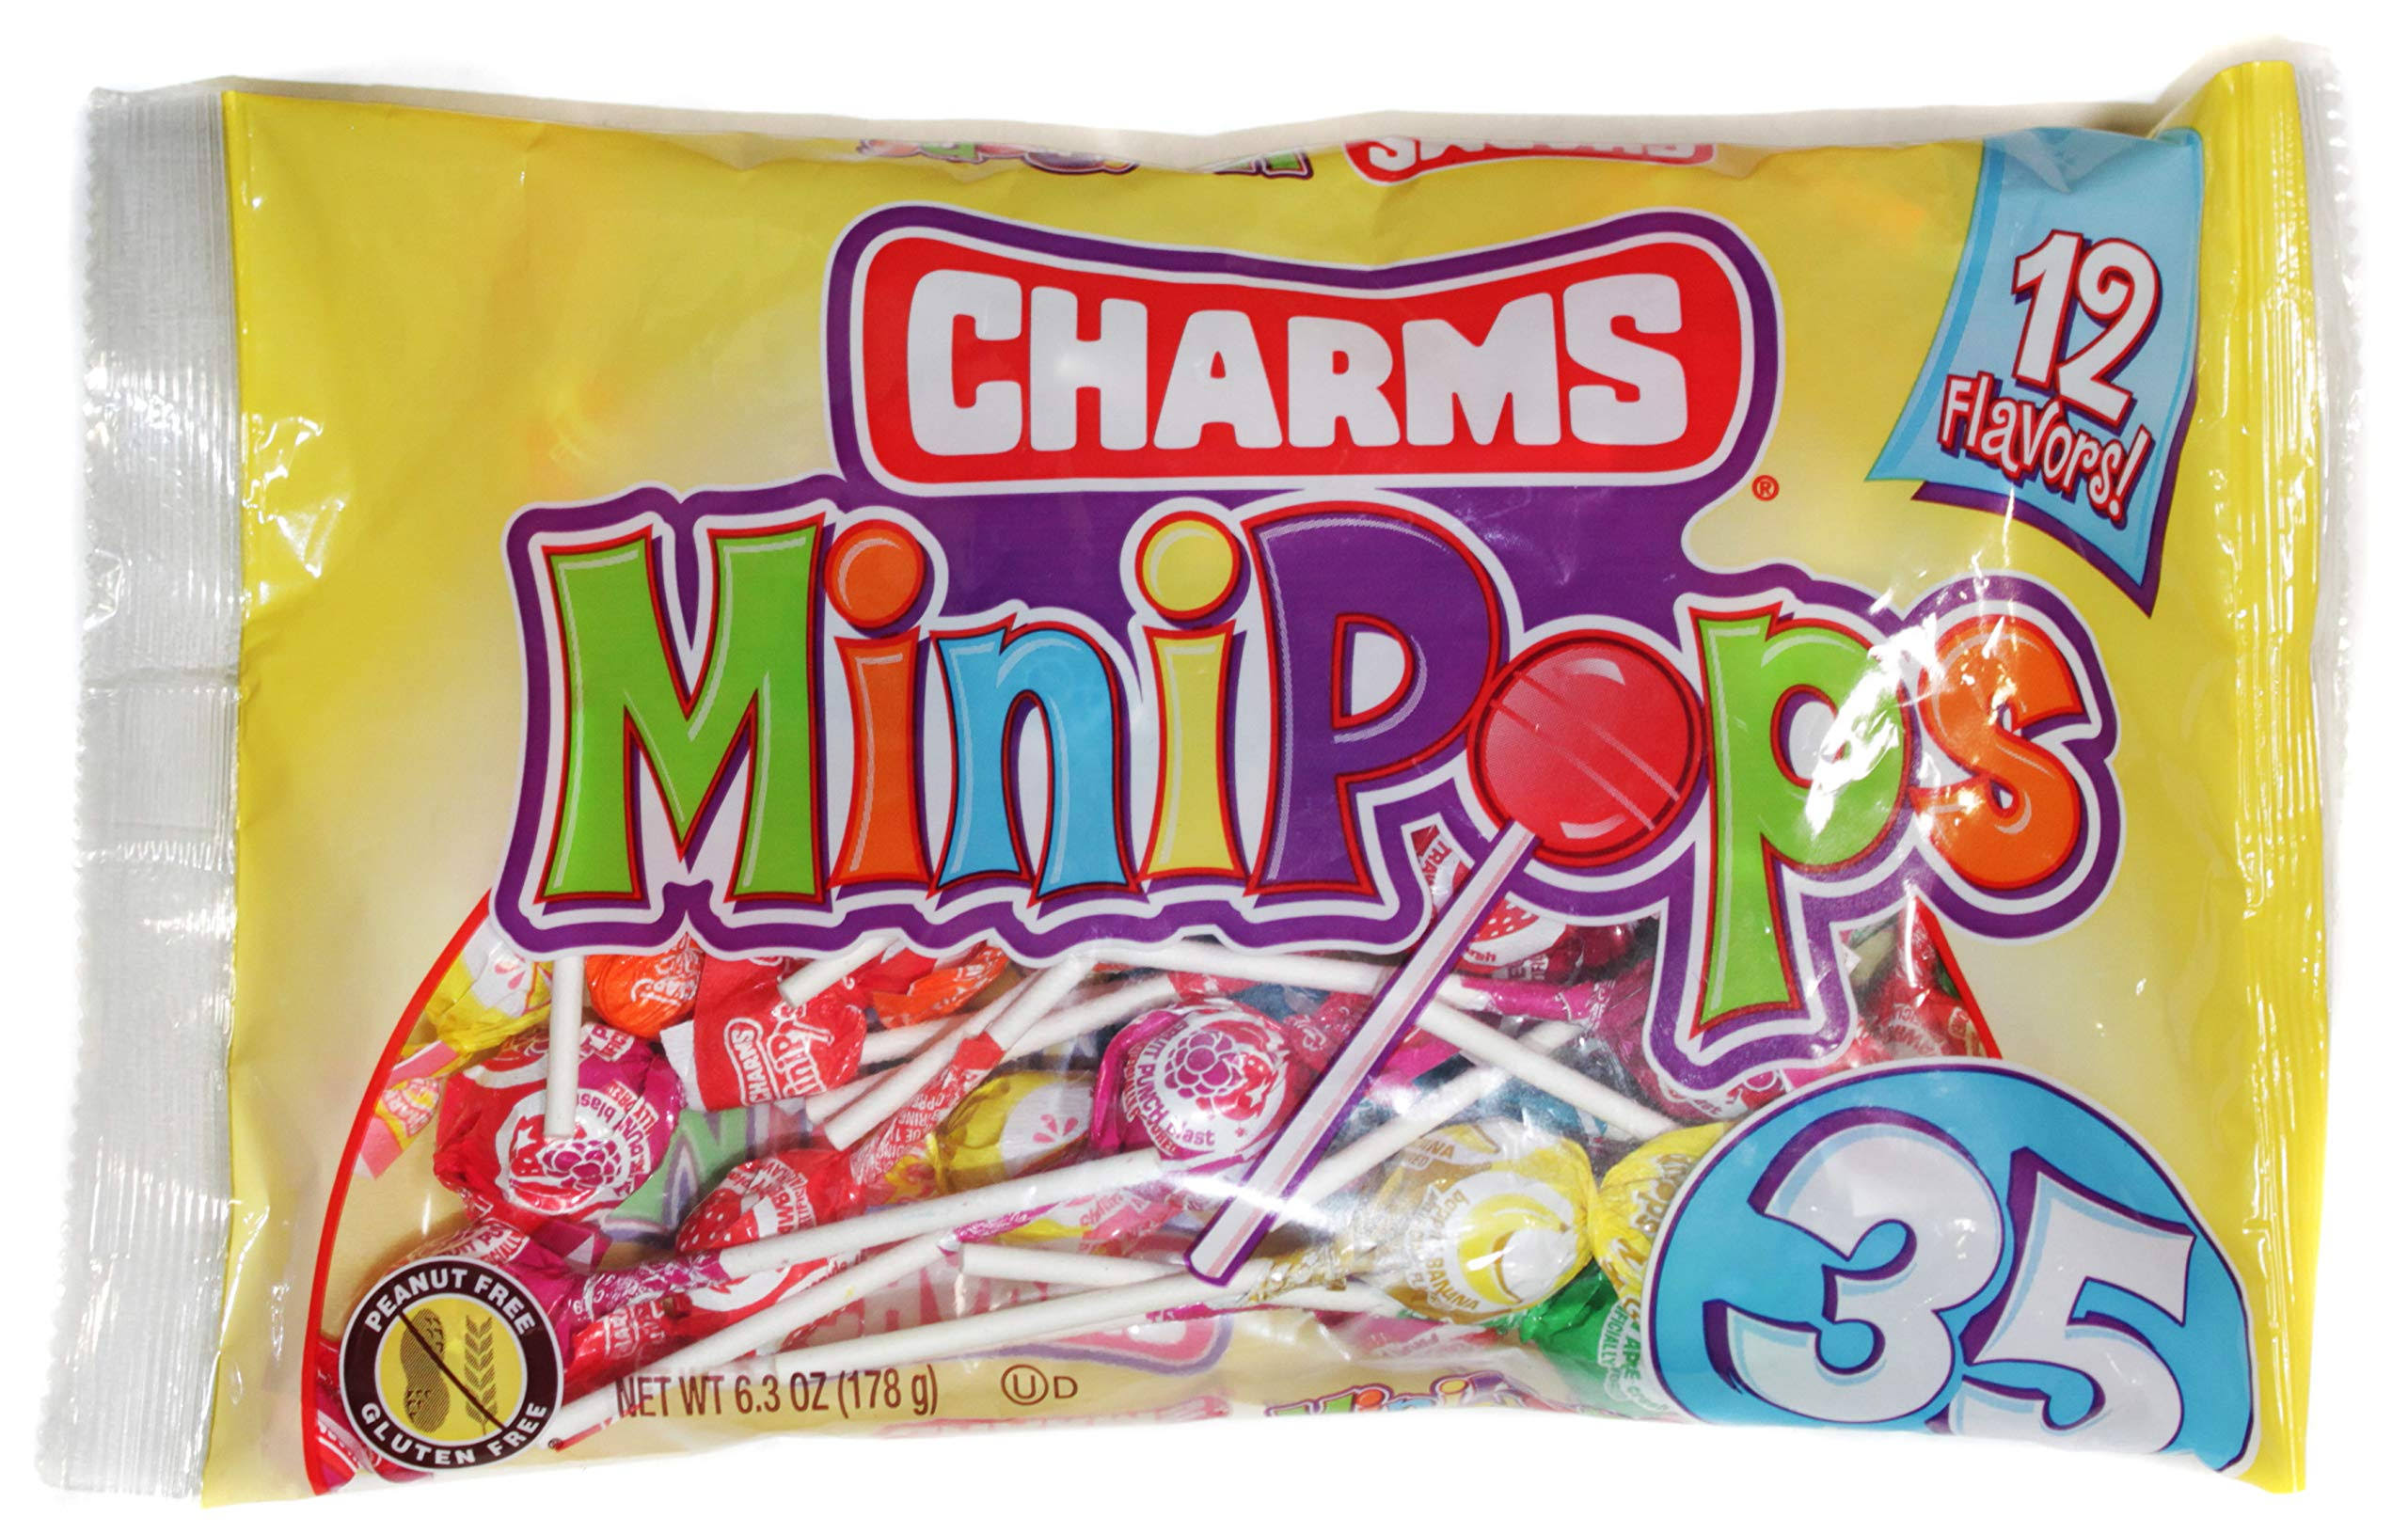 Charms (1) Bag Mini Pops Lollipop Candy - Assorted Fun Flavors - Peanut & Gluten Free 35pc per Bag 6.3 oz